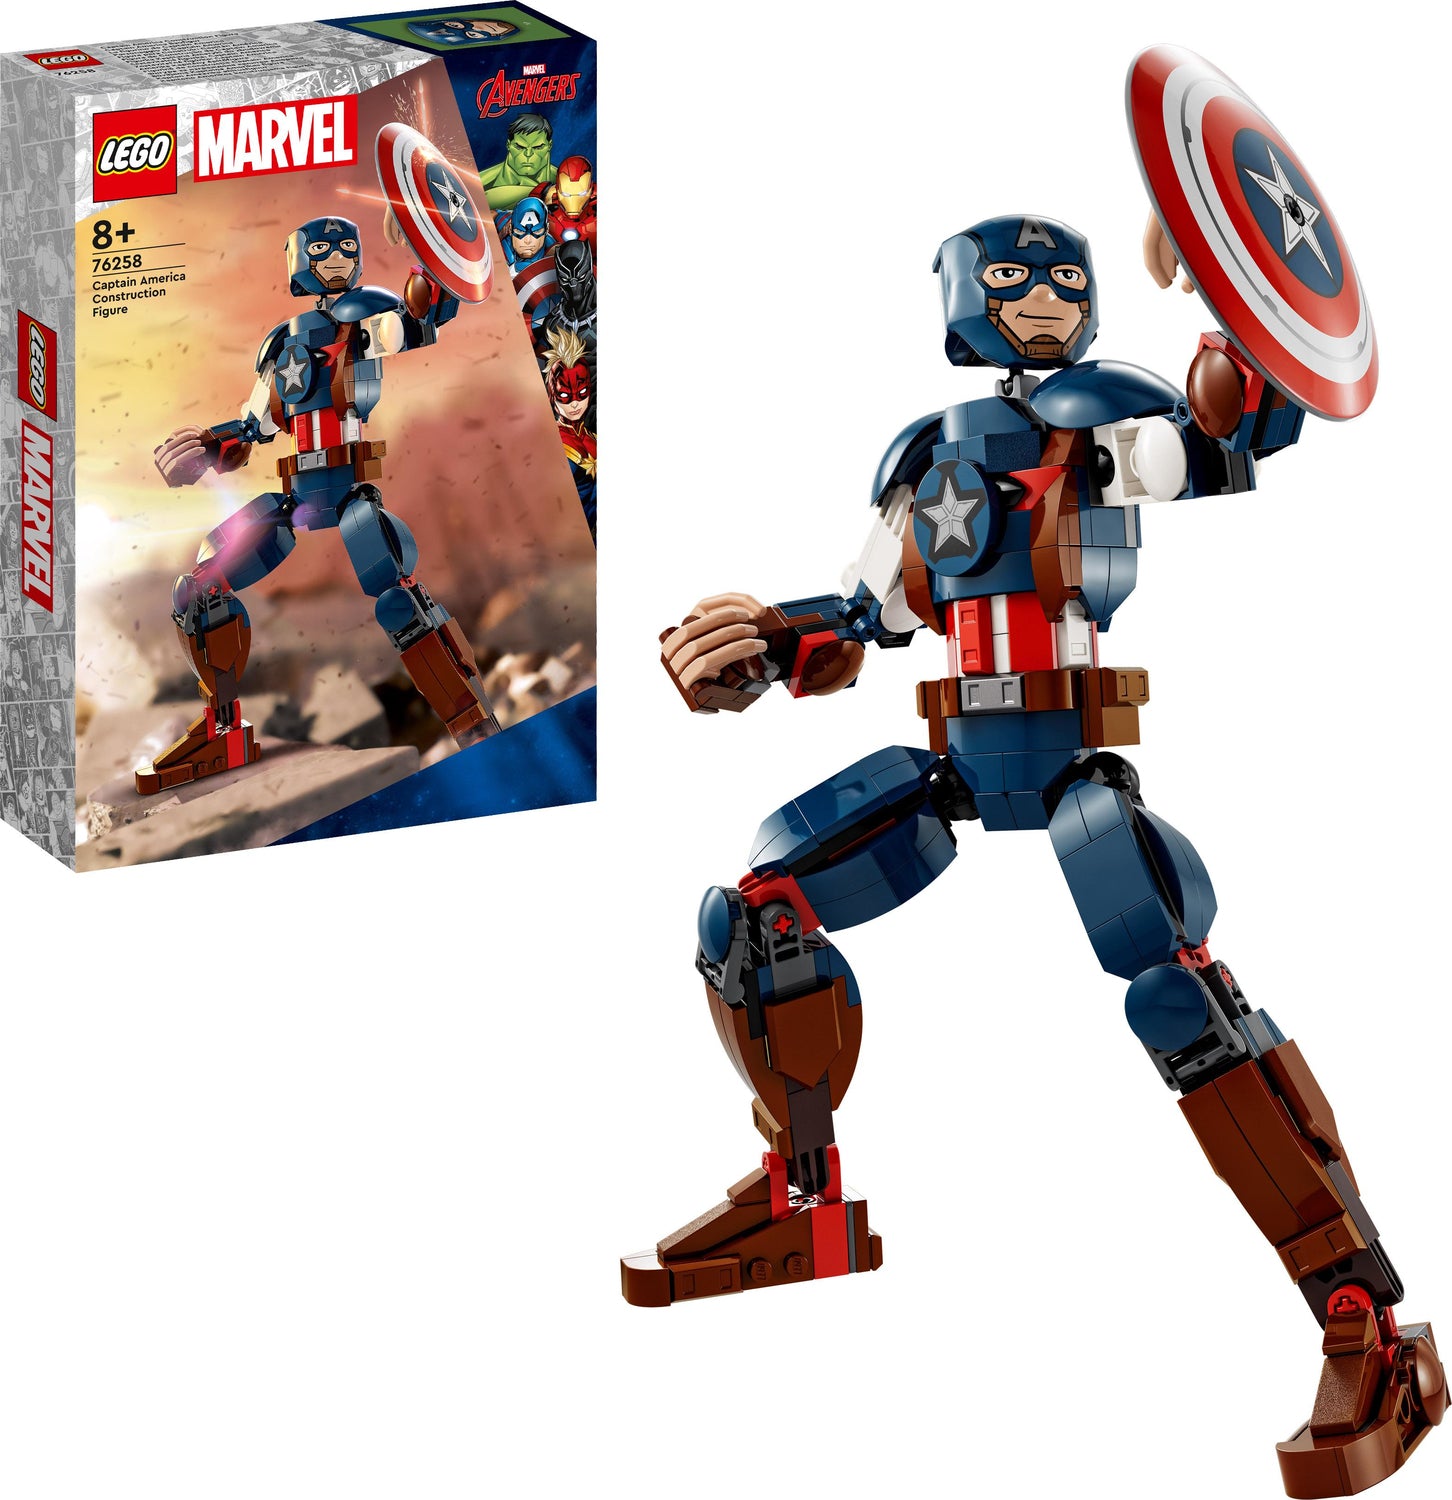 LEGO® Marvel Super Heroes Marvel Captain America Construction Figure